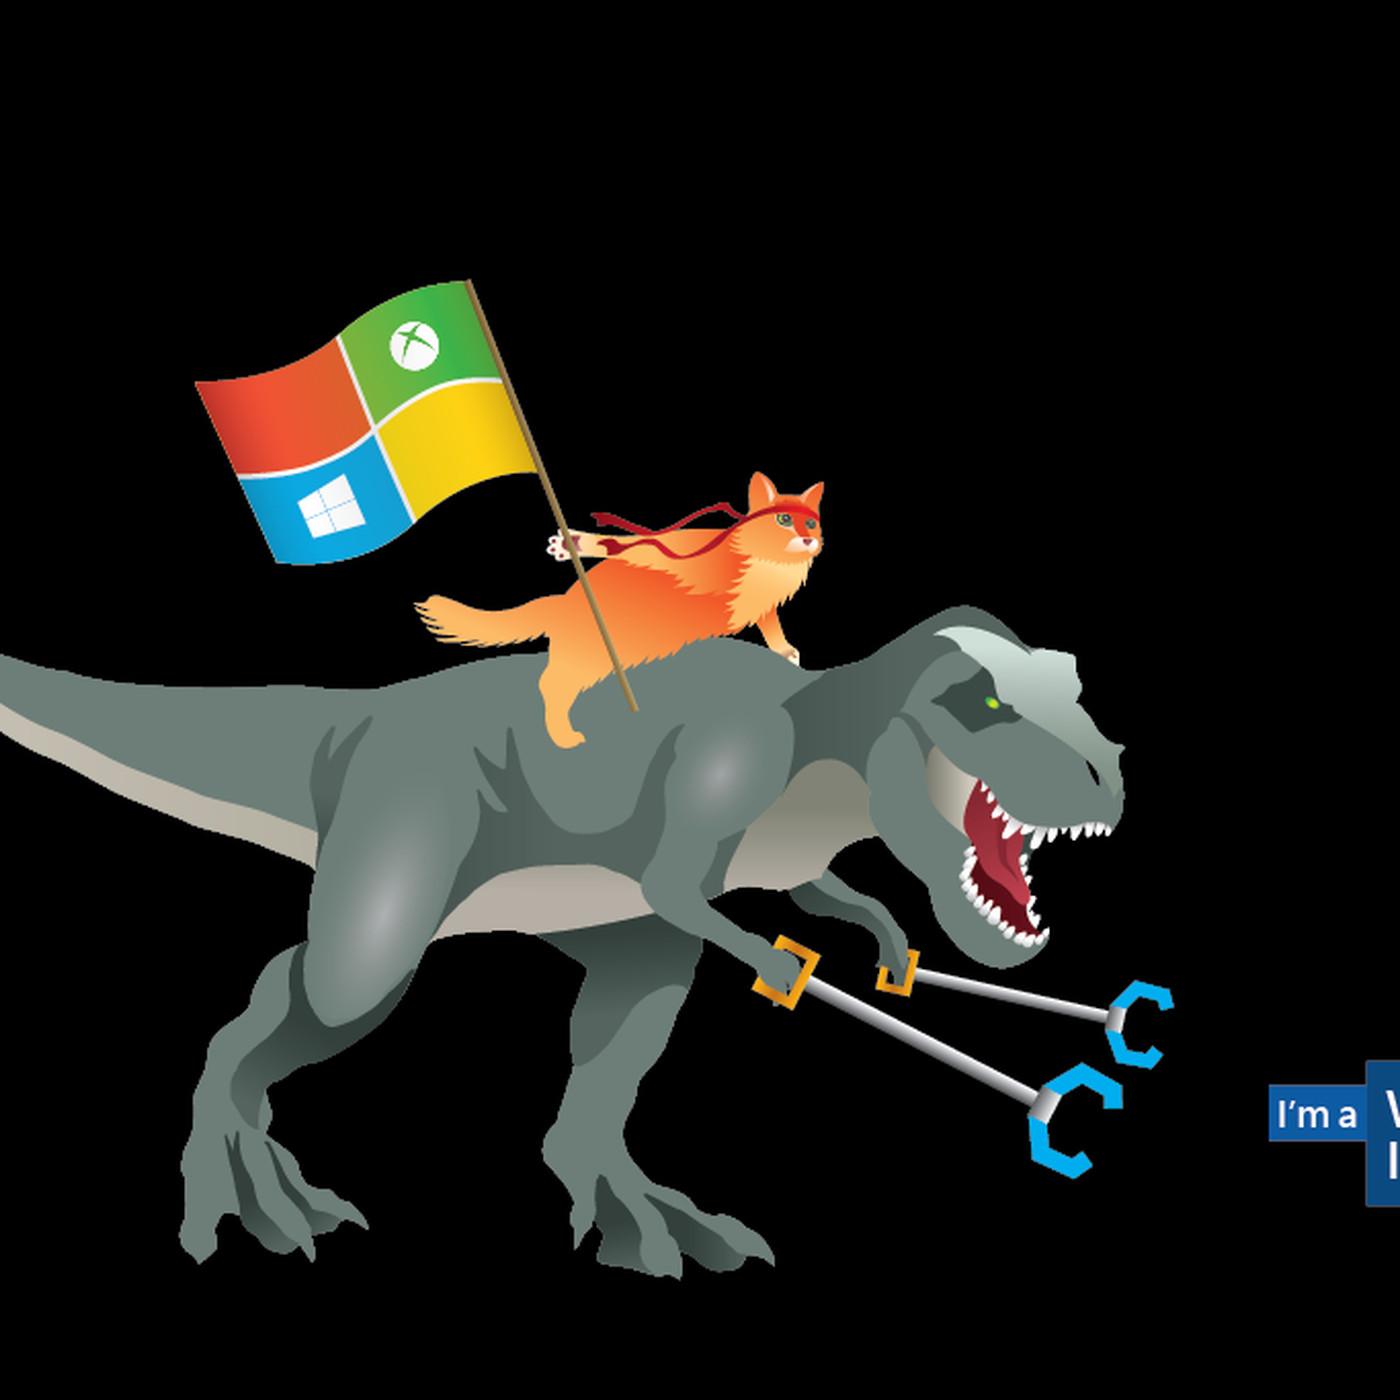 Microsoft's Windows ninja cat now rides a Tyrannosaurus rex